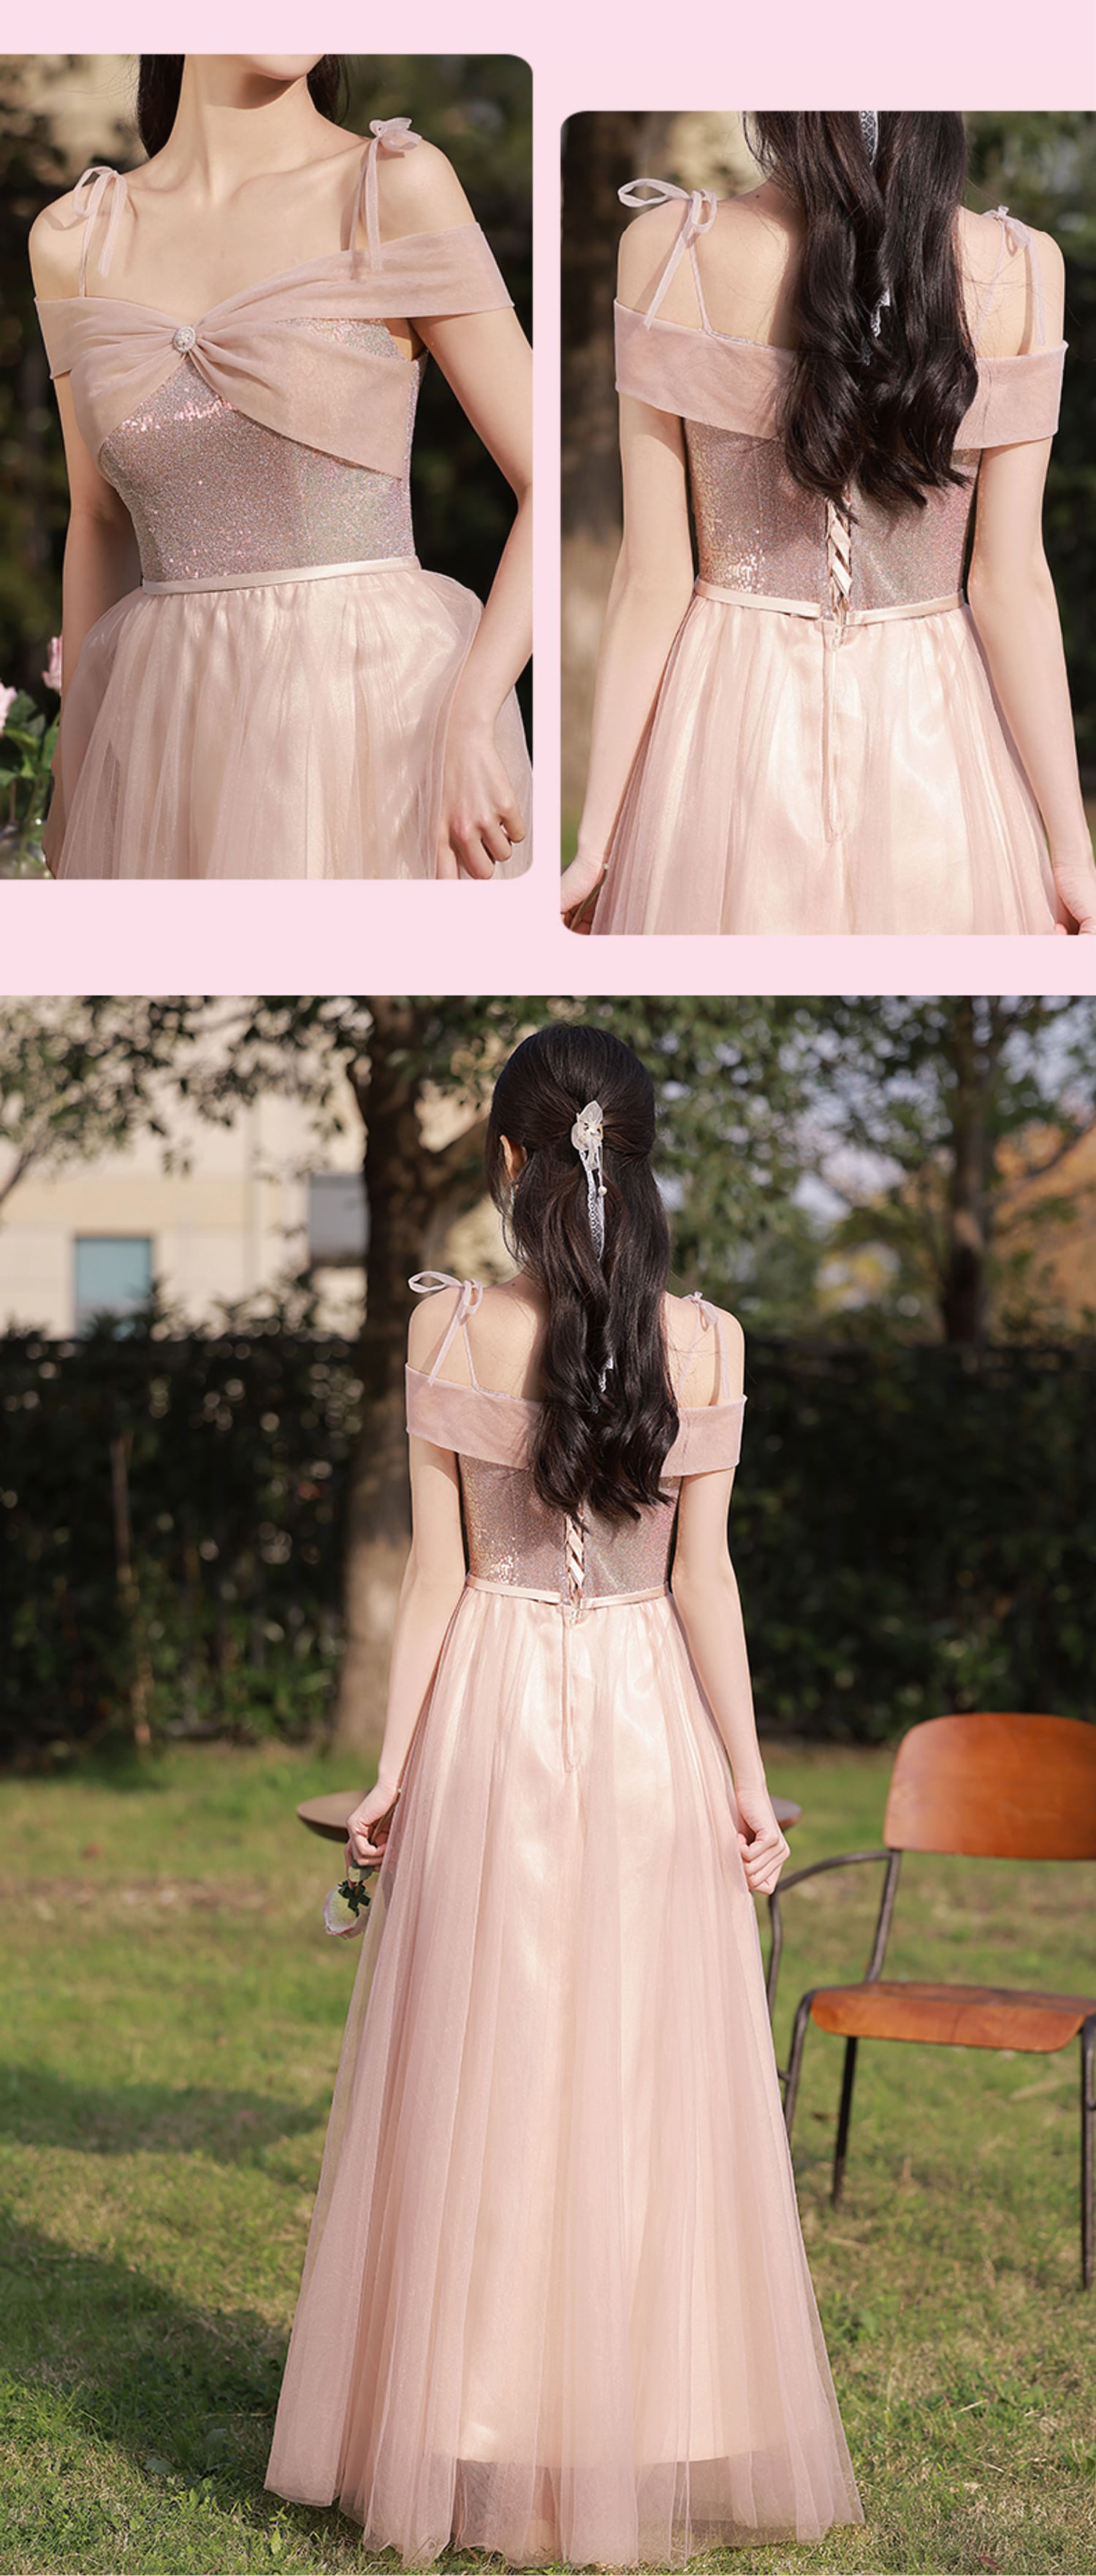 Elegant-Pink-Maxi-Dress-for-Prom-Wedding-Bridesmaid-Birthday-Party22.jpg